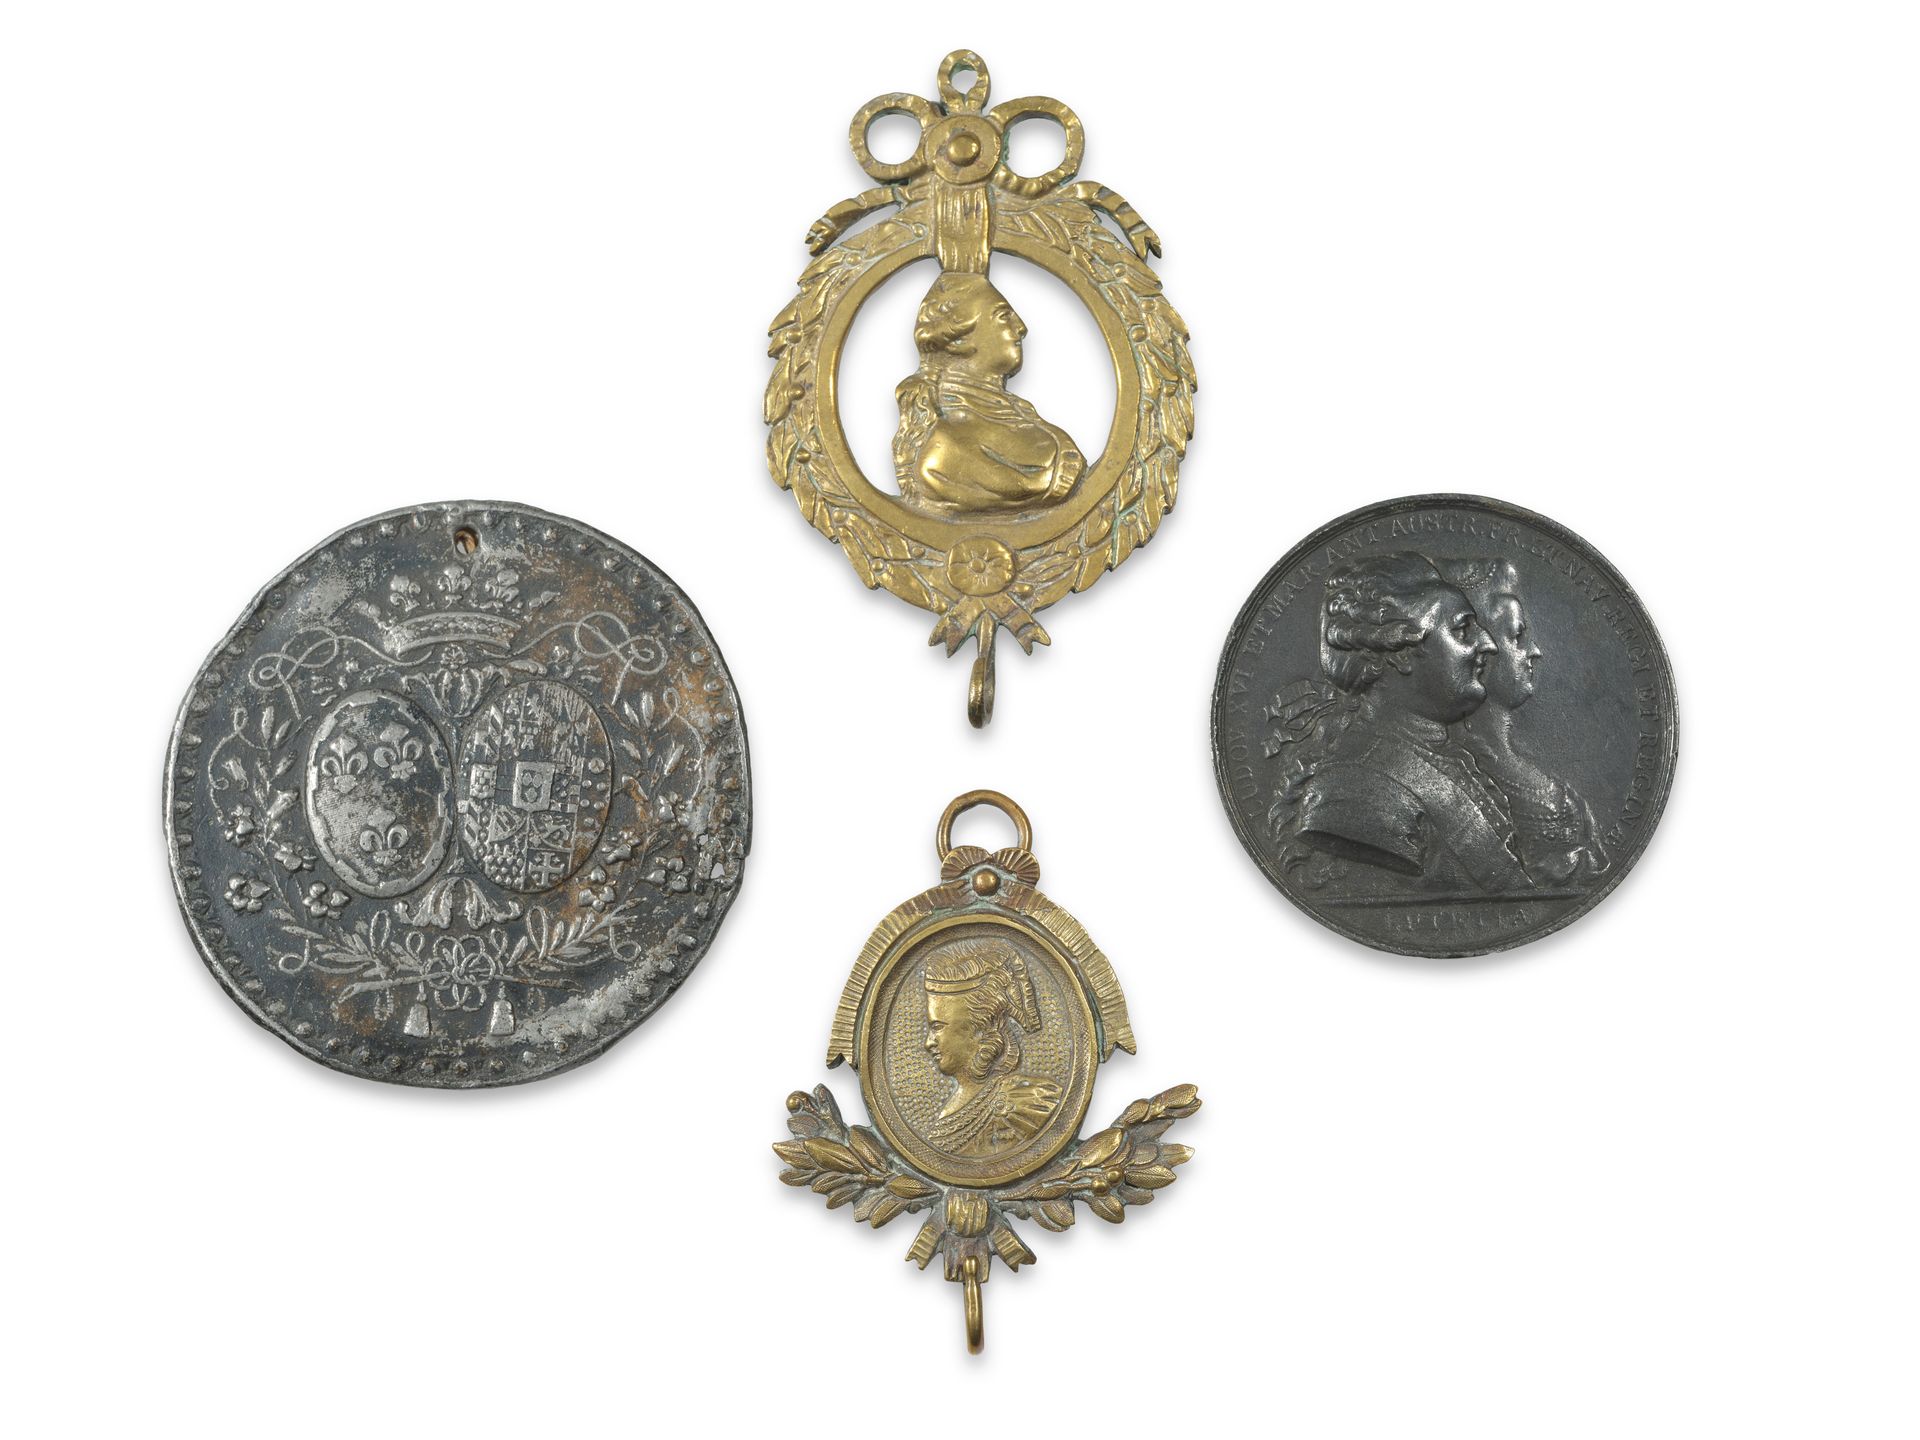 Null 保皇派拍品，包括一枚带有贝里公爵夫人徽章的奖章，一枚奖章和两个带有路易十六和玛丽-安托瓦内特轮廓的表座
玛丽-安托瓦内特
锡石和黄铜
18-19世纪
&hellip;